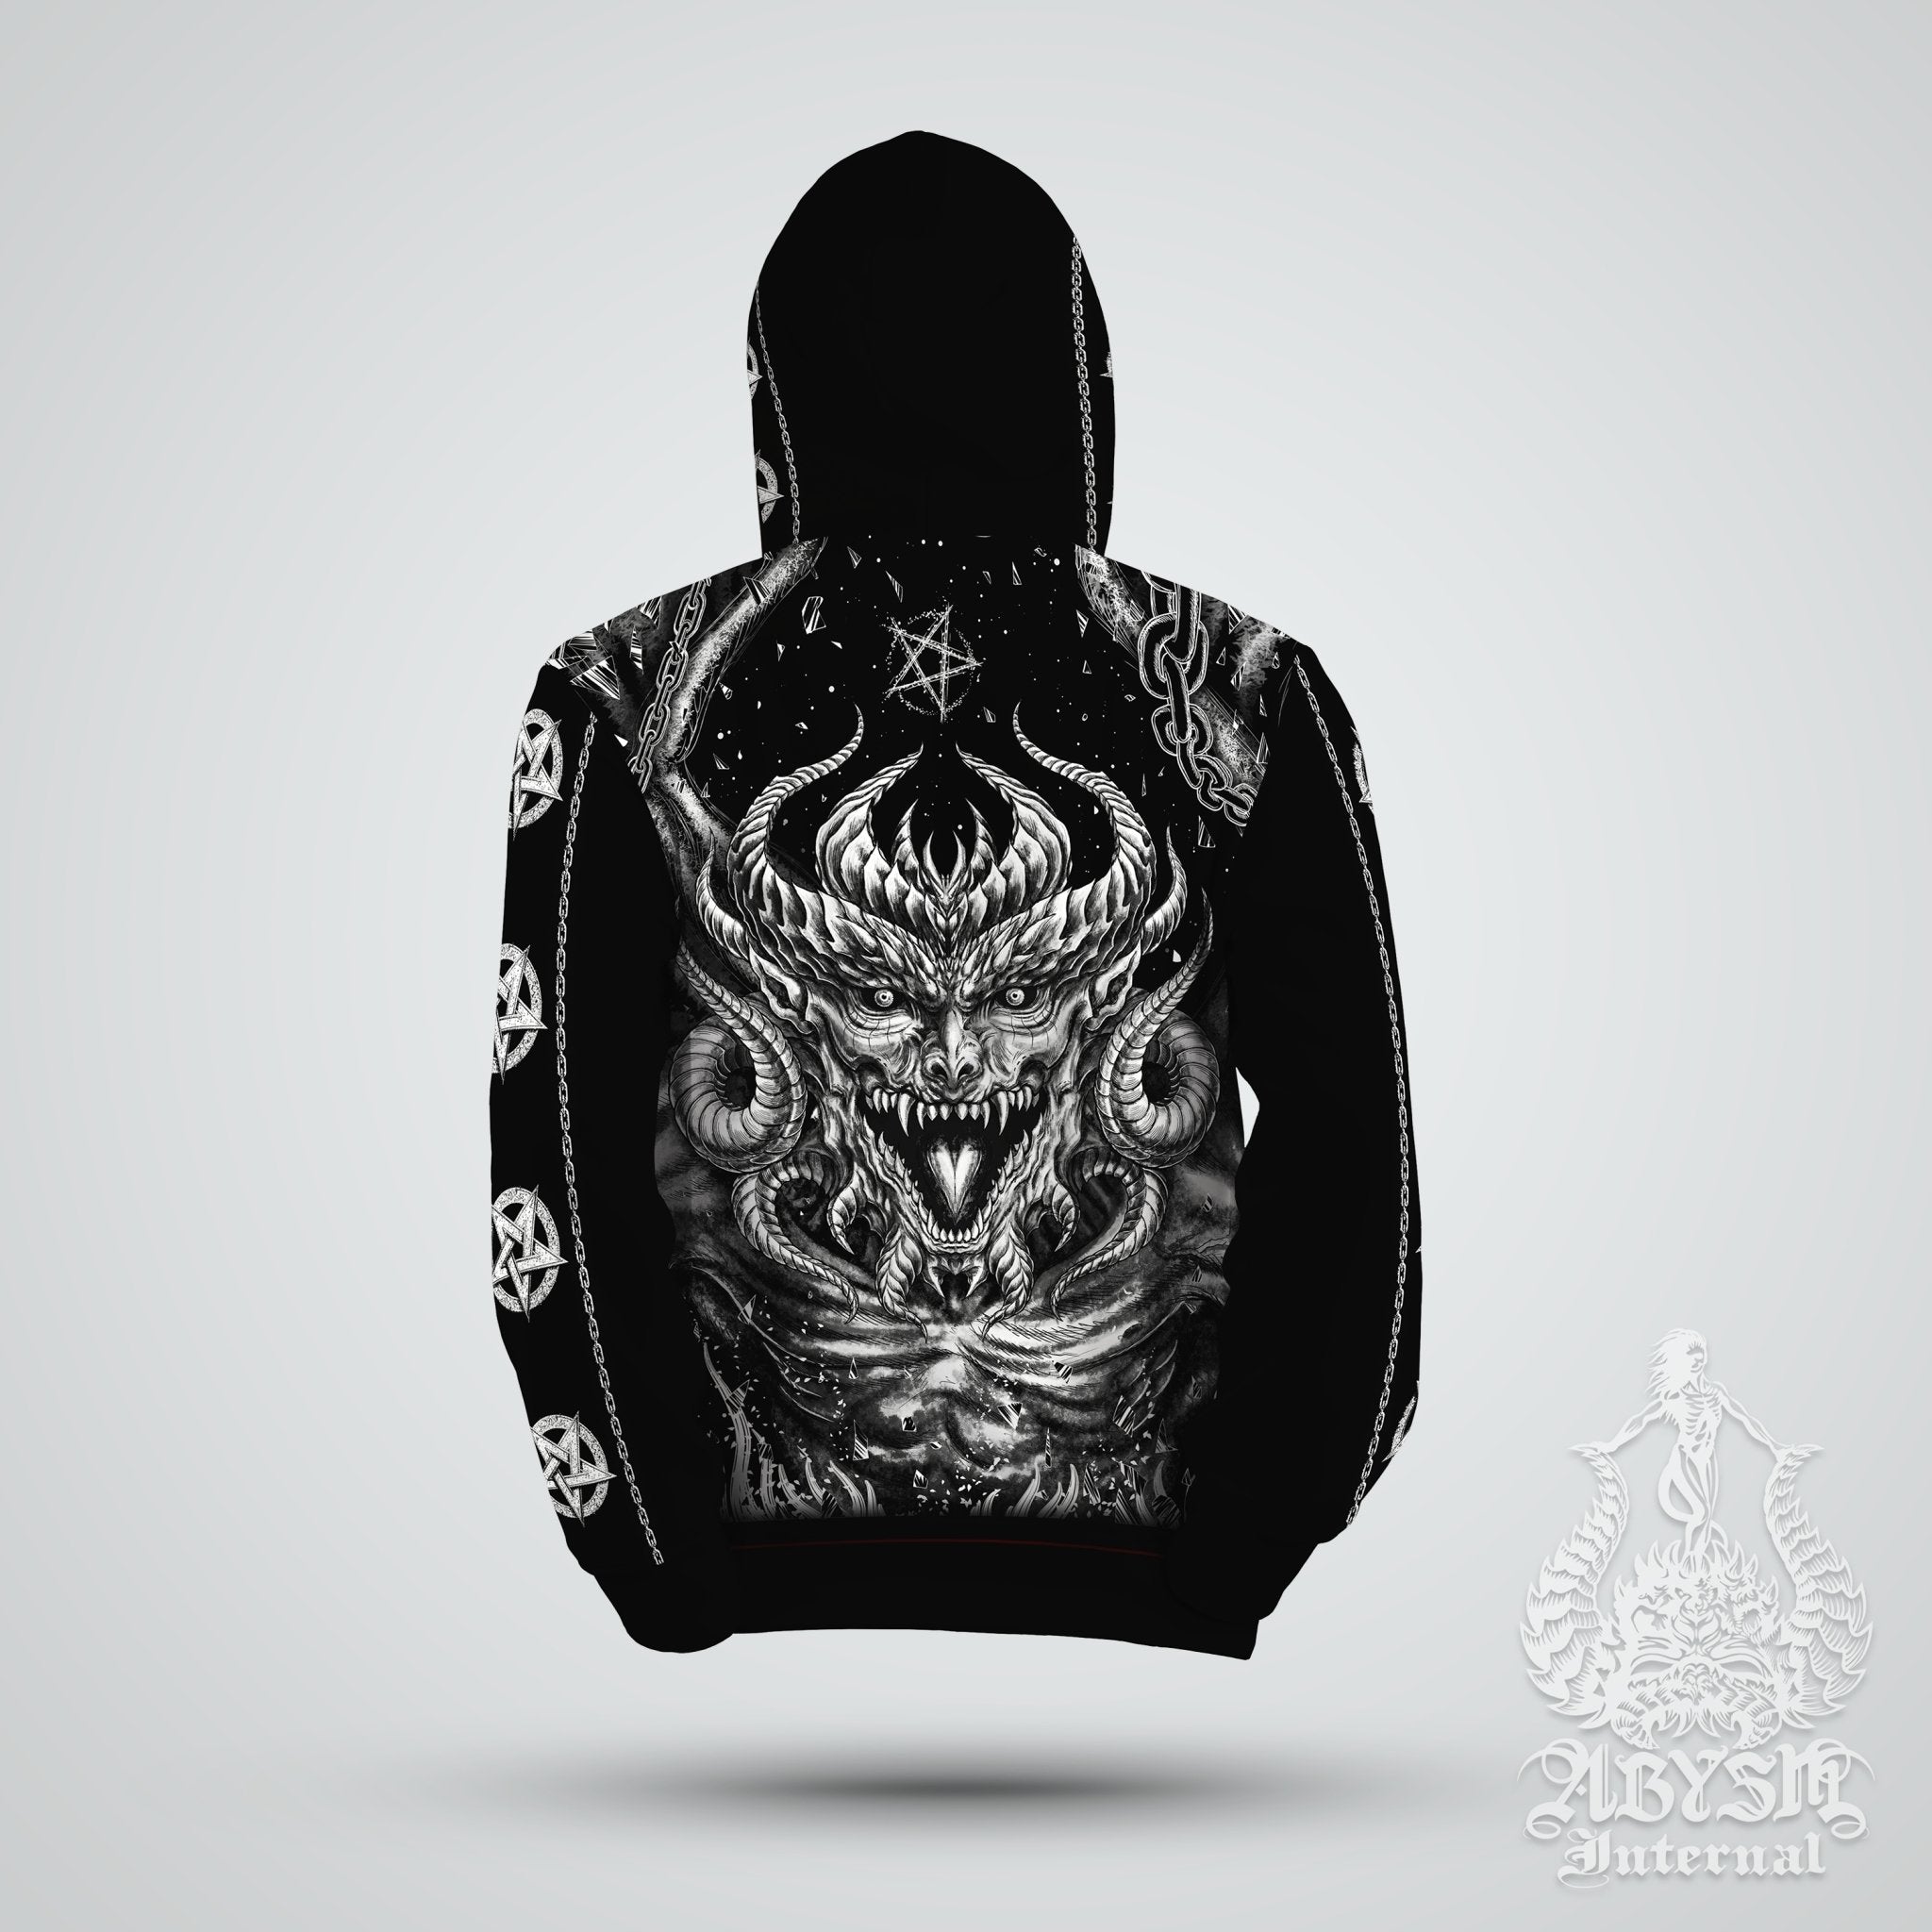 Satanic Hoodie, Devil Streetwear, Black Metal, Alternative Clothing, Unisex - Gothic Hell - Abysm Internal